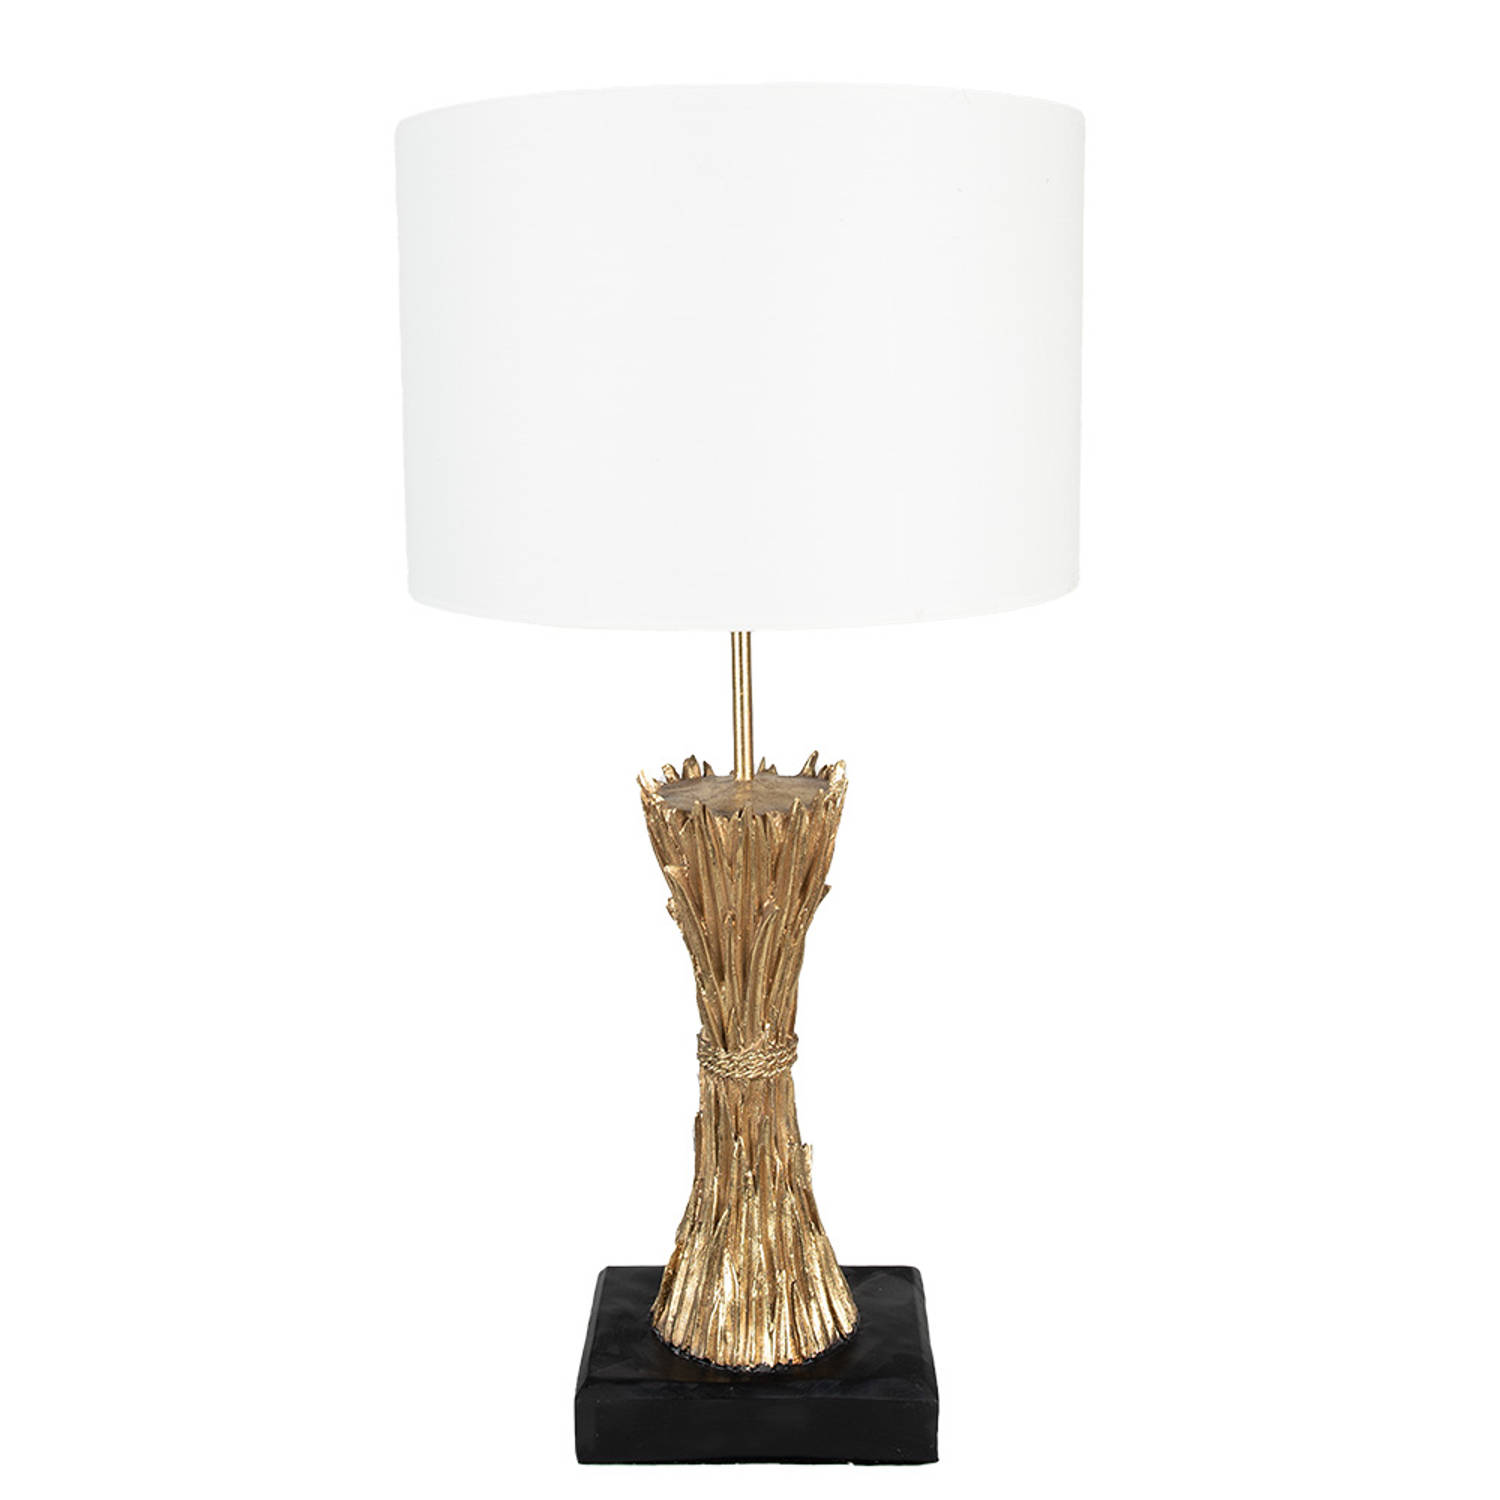 HAES DECO - Tafellamp - Modern Chic - Stijlvolle Lamp, formaat Ø 30x60 cm - Zwart / Goudkleurig met Witte Lampenkap - Bureaulamp, Sfeerlamp